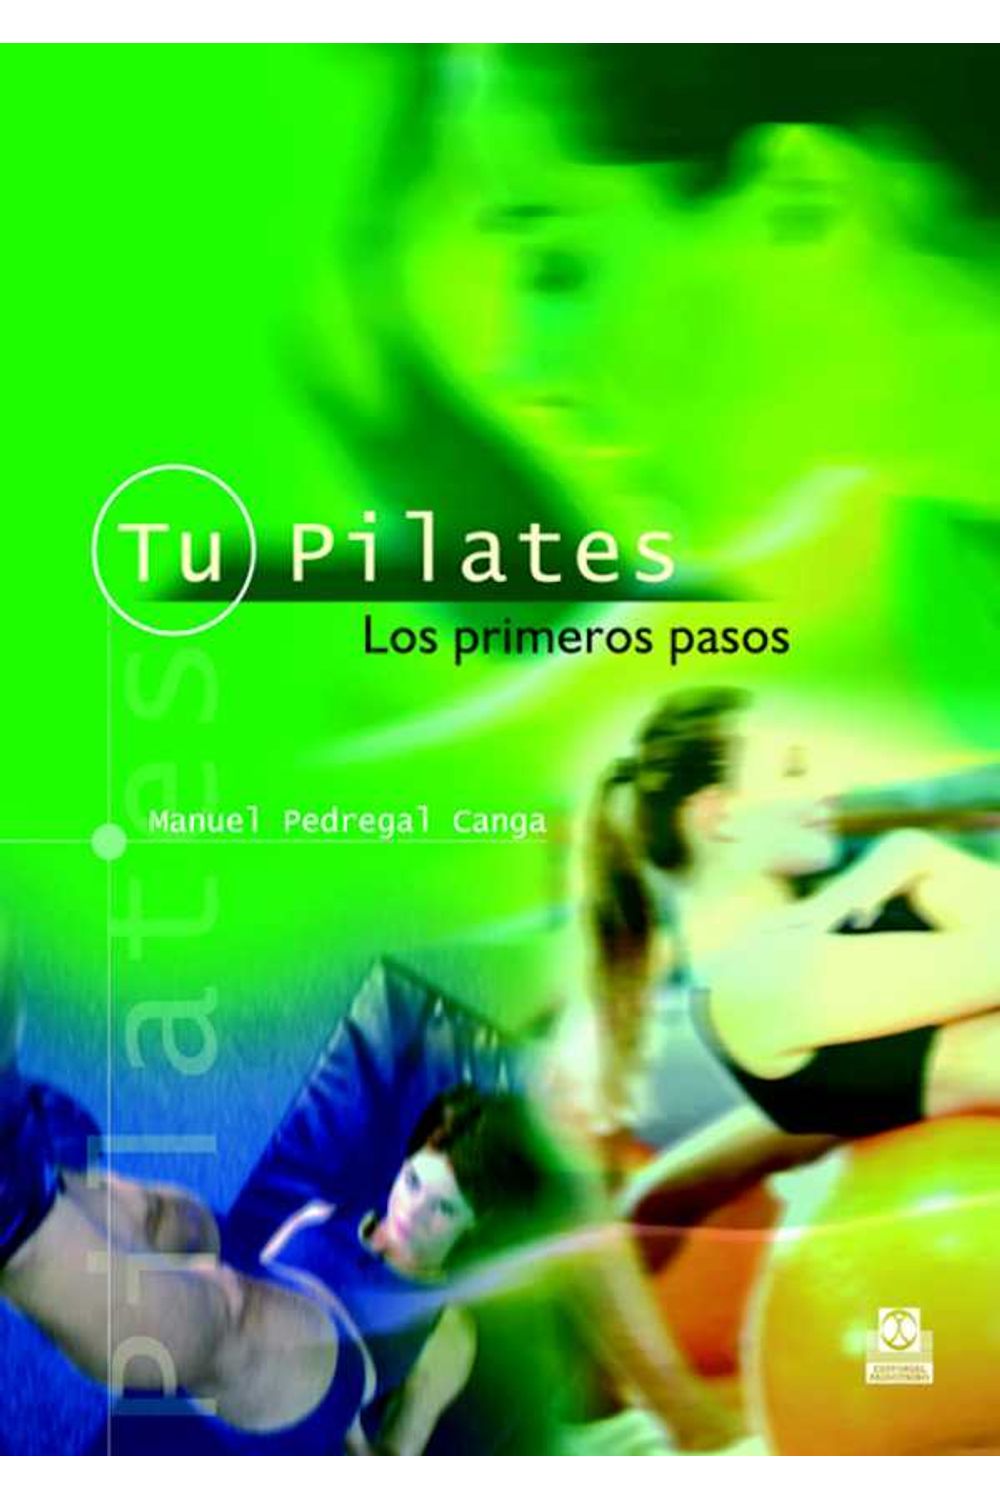 bw-tu-pilates-paidotribo-9788499102238